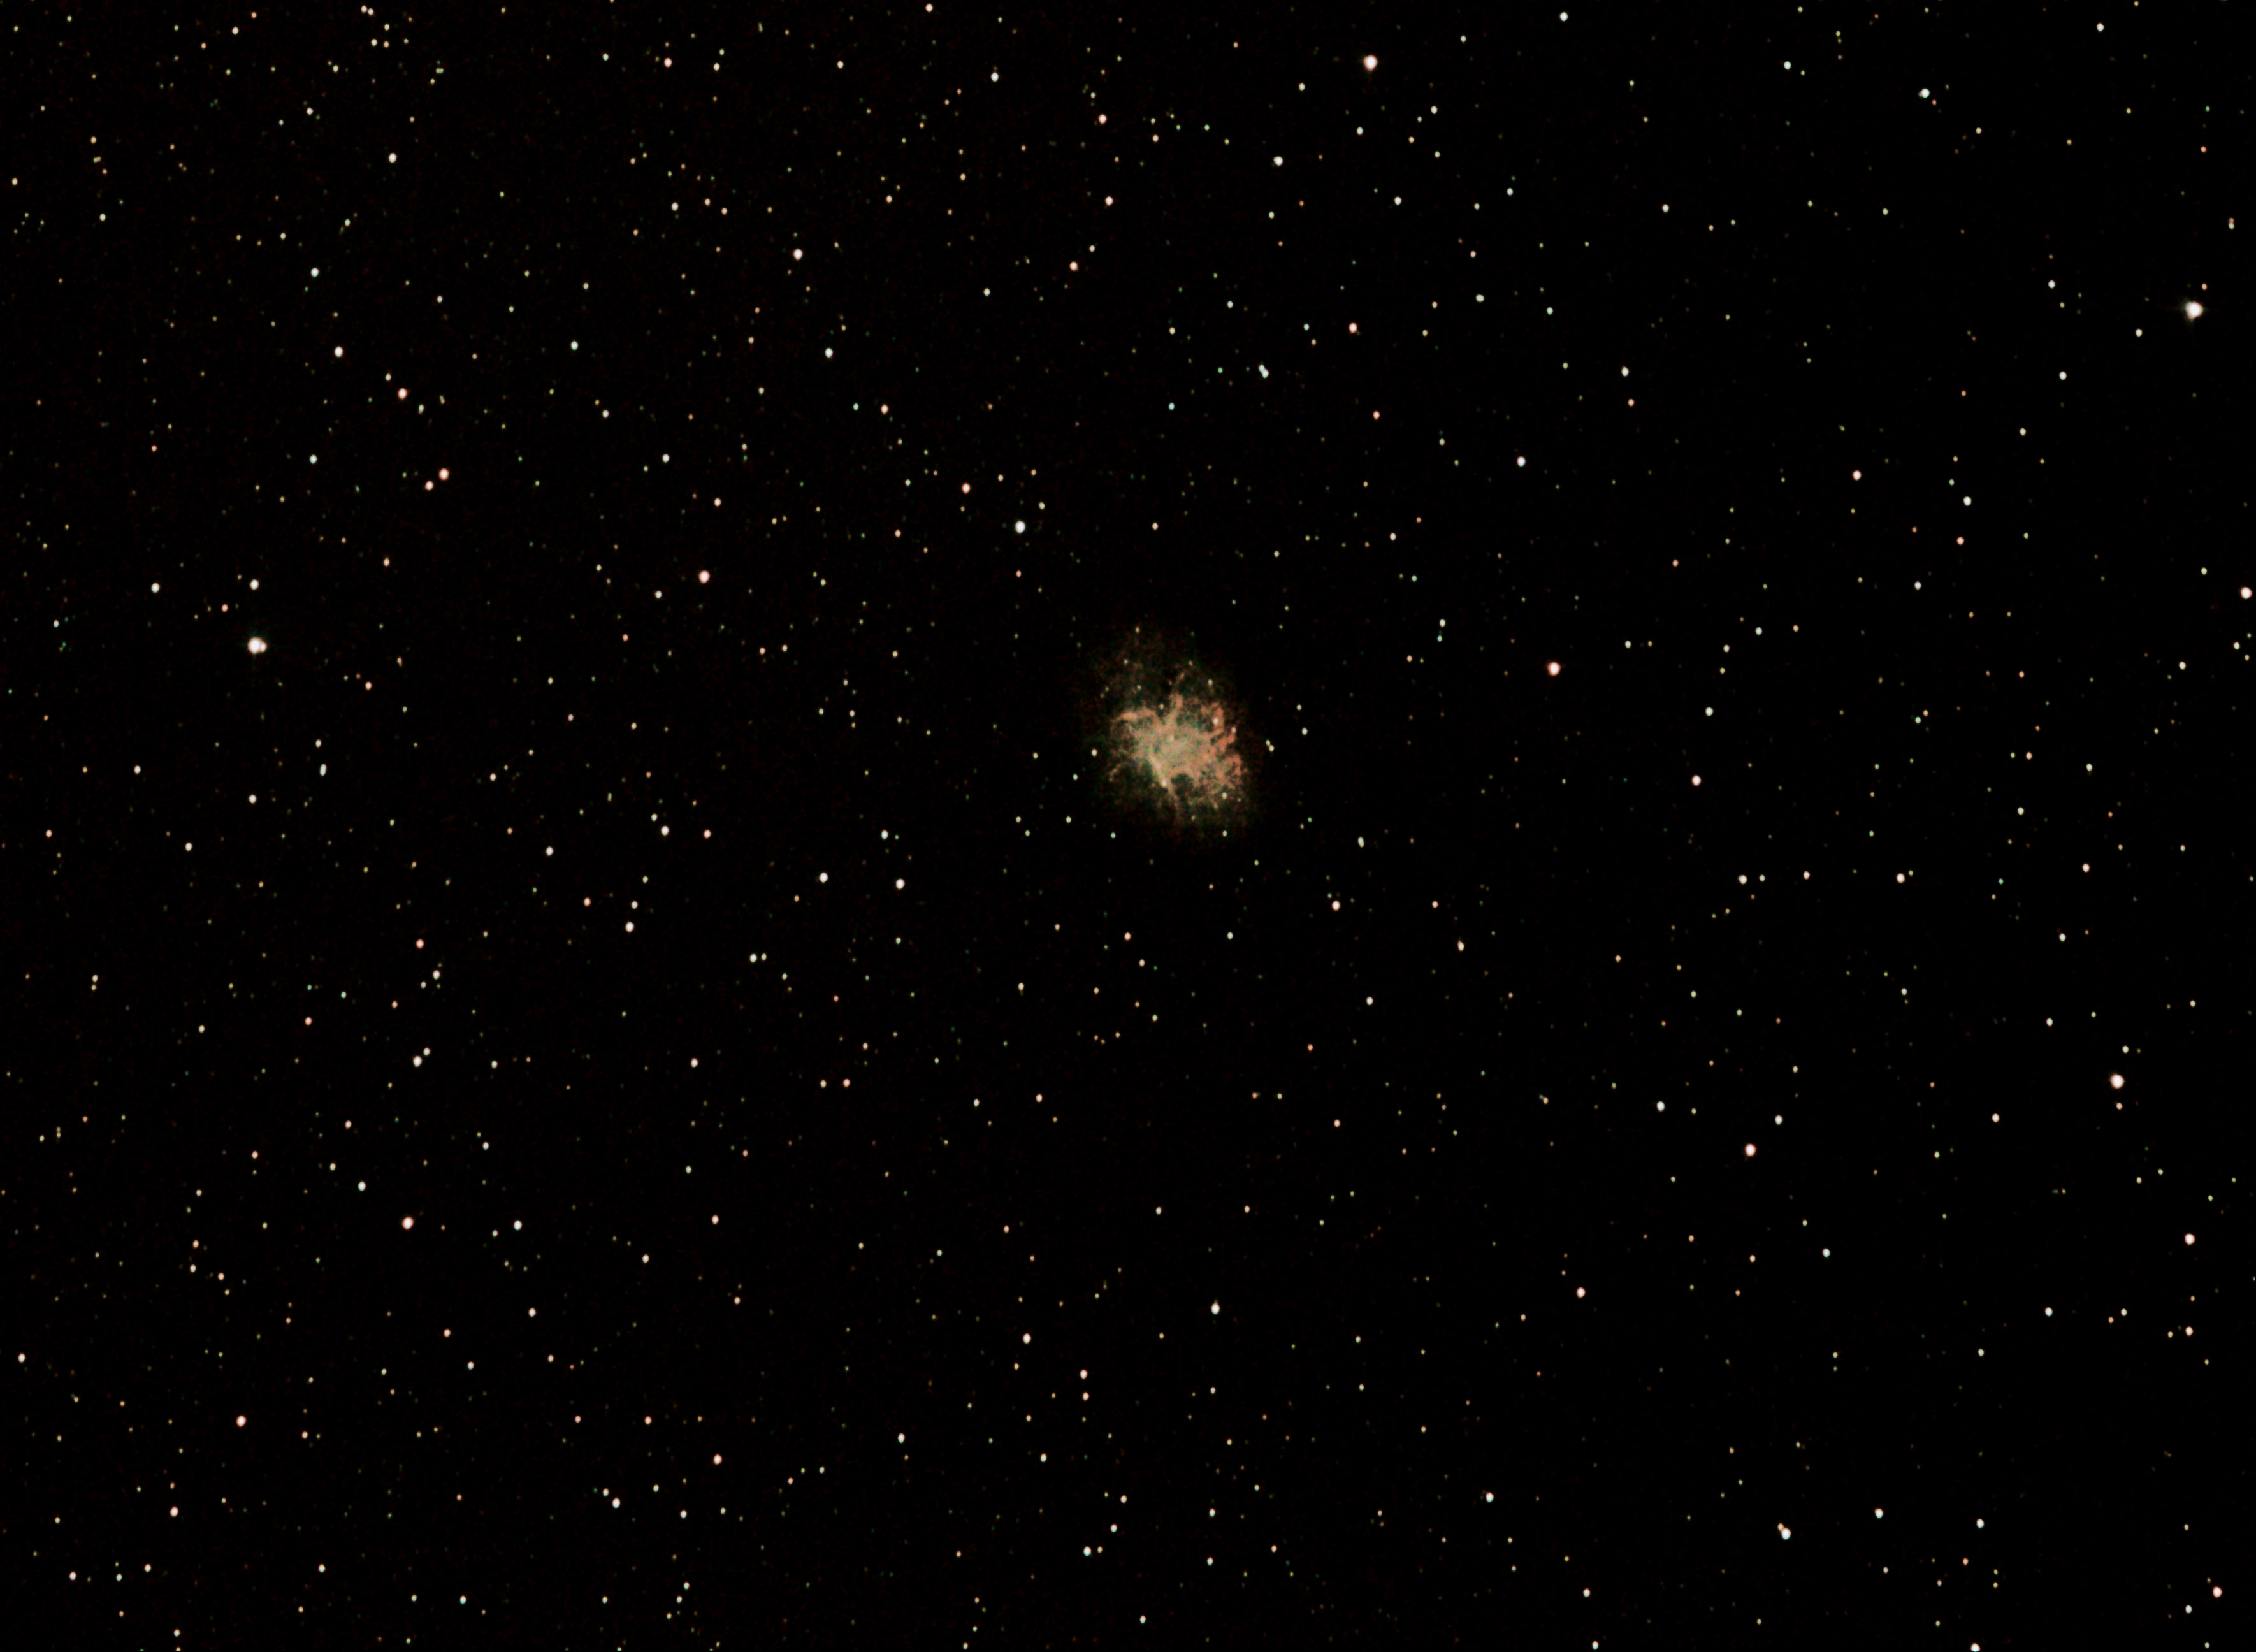 M1 Crab Nebula